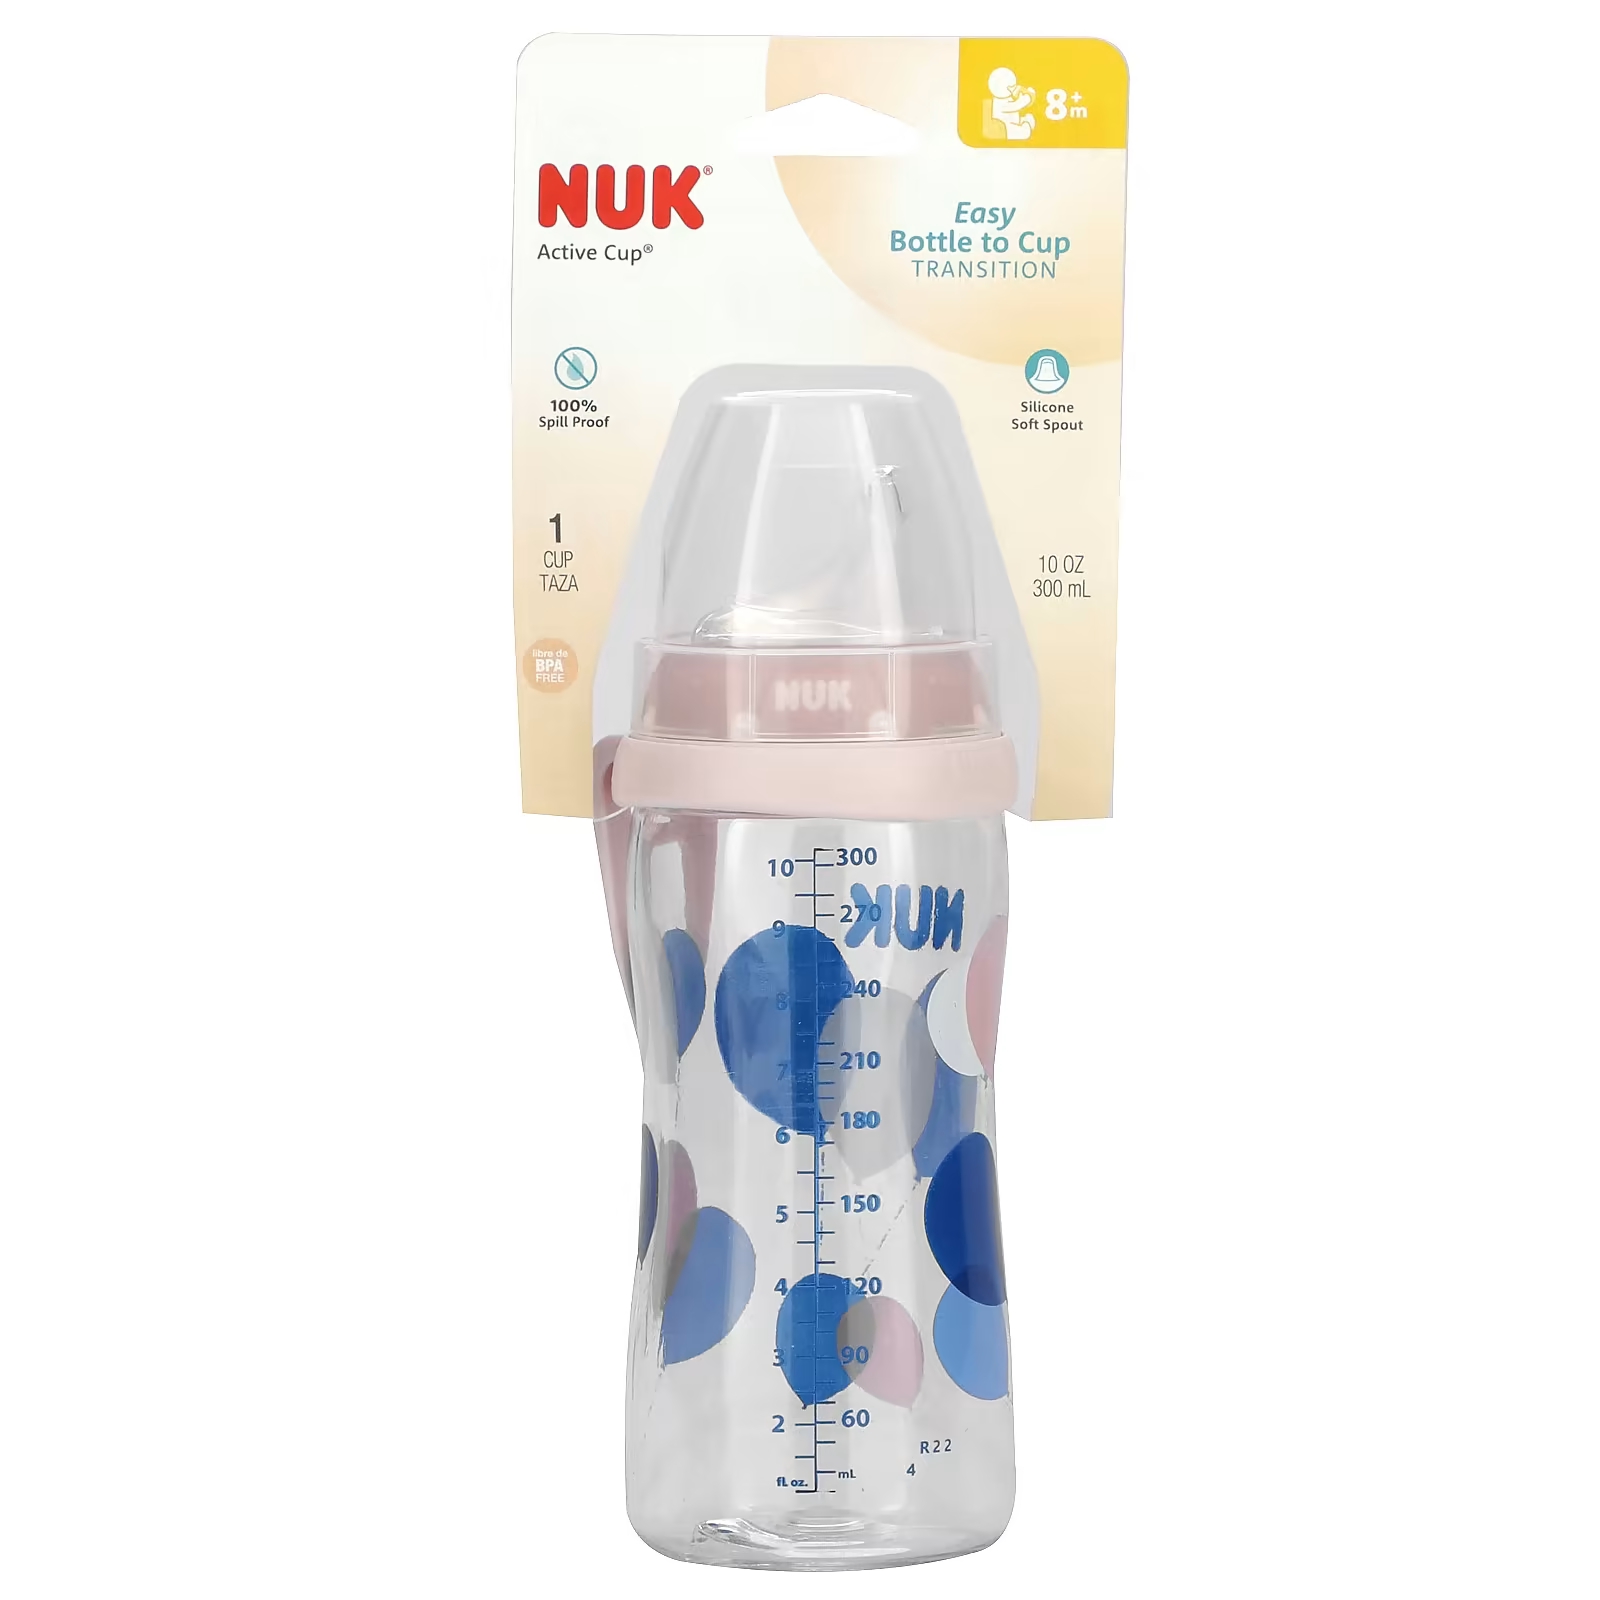 Бутылочка NUK Active Cup от 8 месяцев розовый, 300мл nuk dinosaur active cup 12 months 1 cup 10 oz 300 ml